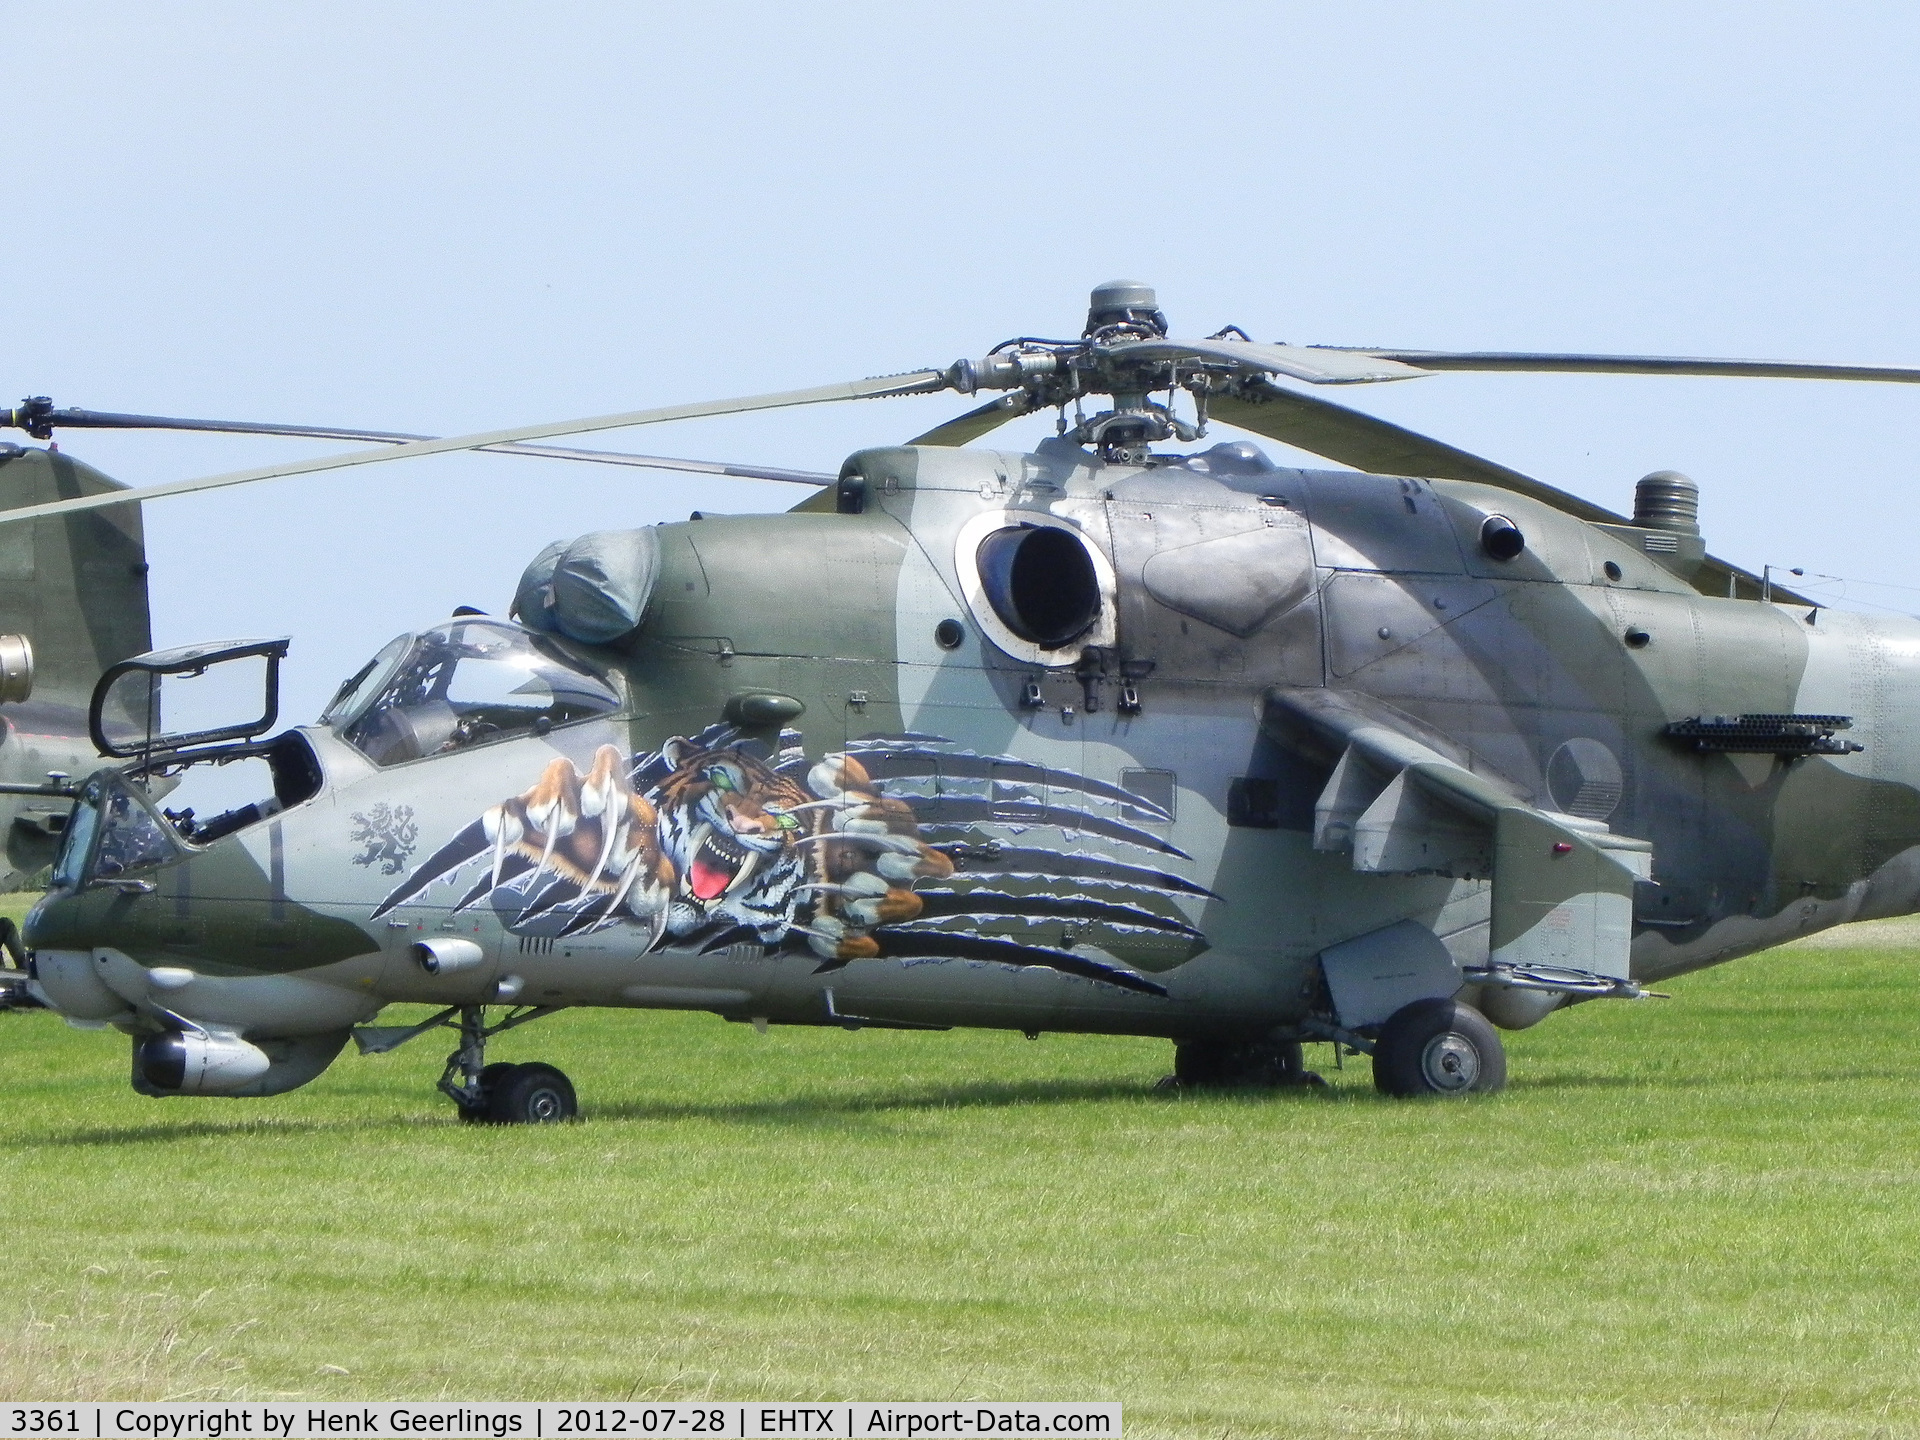 3361, 2005 Mil Mi-35 Hind E C/N 203361, Texel Airshow , 28 July 2012 

Spcl cs 